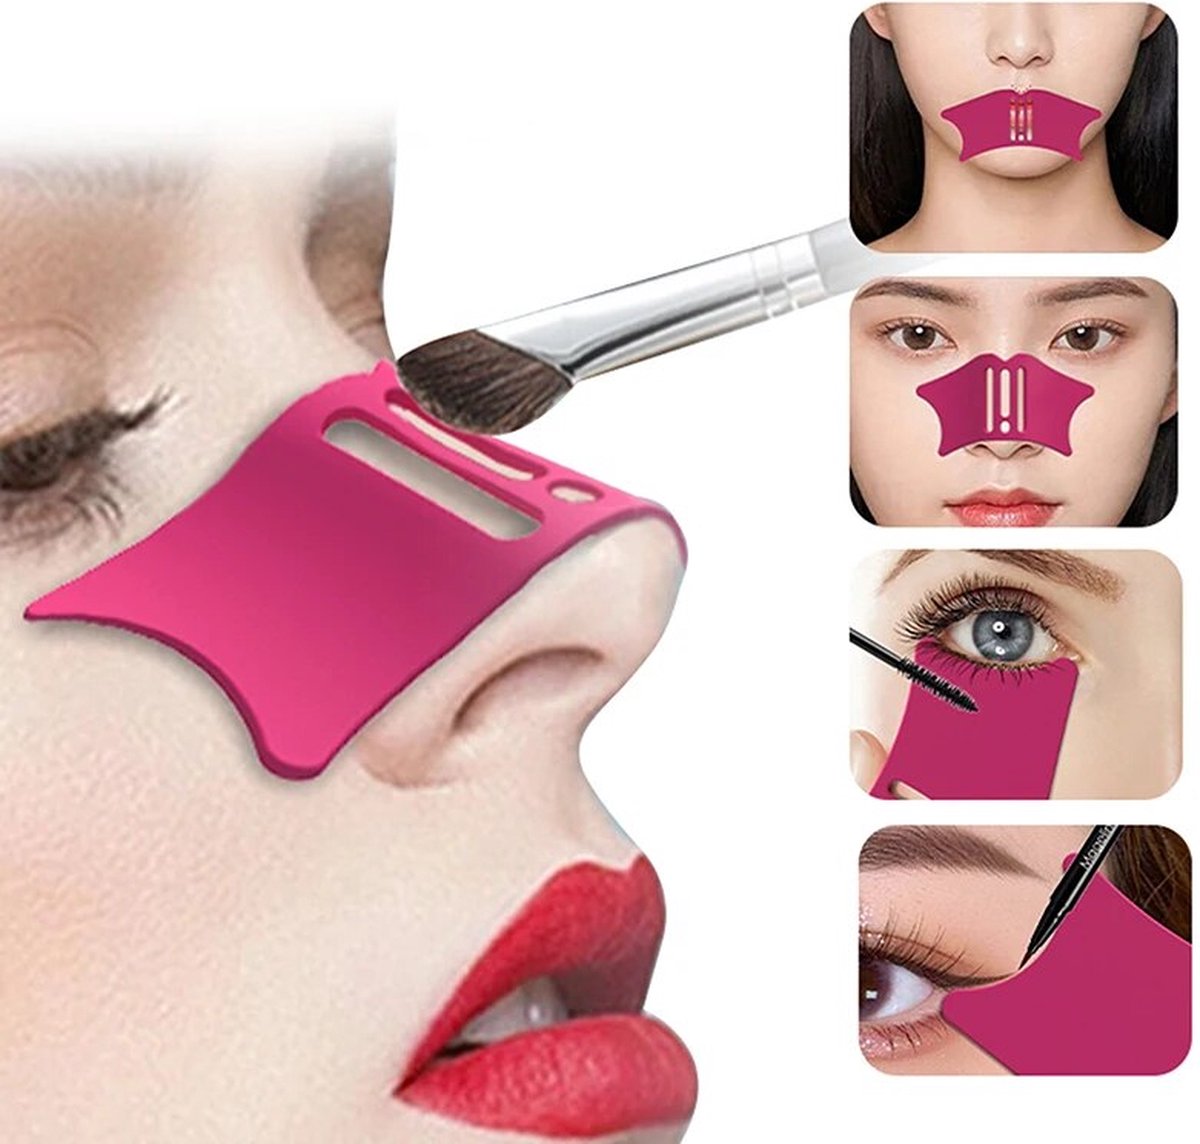 GEAR3000 - Neus contour stempel - eyeliner sjabloon - voor highlighter stick of contour stick - make up stempel